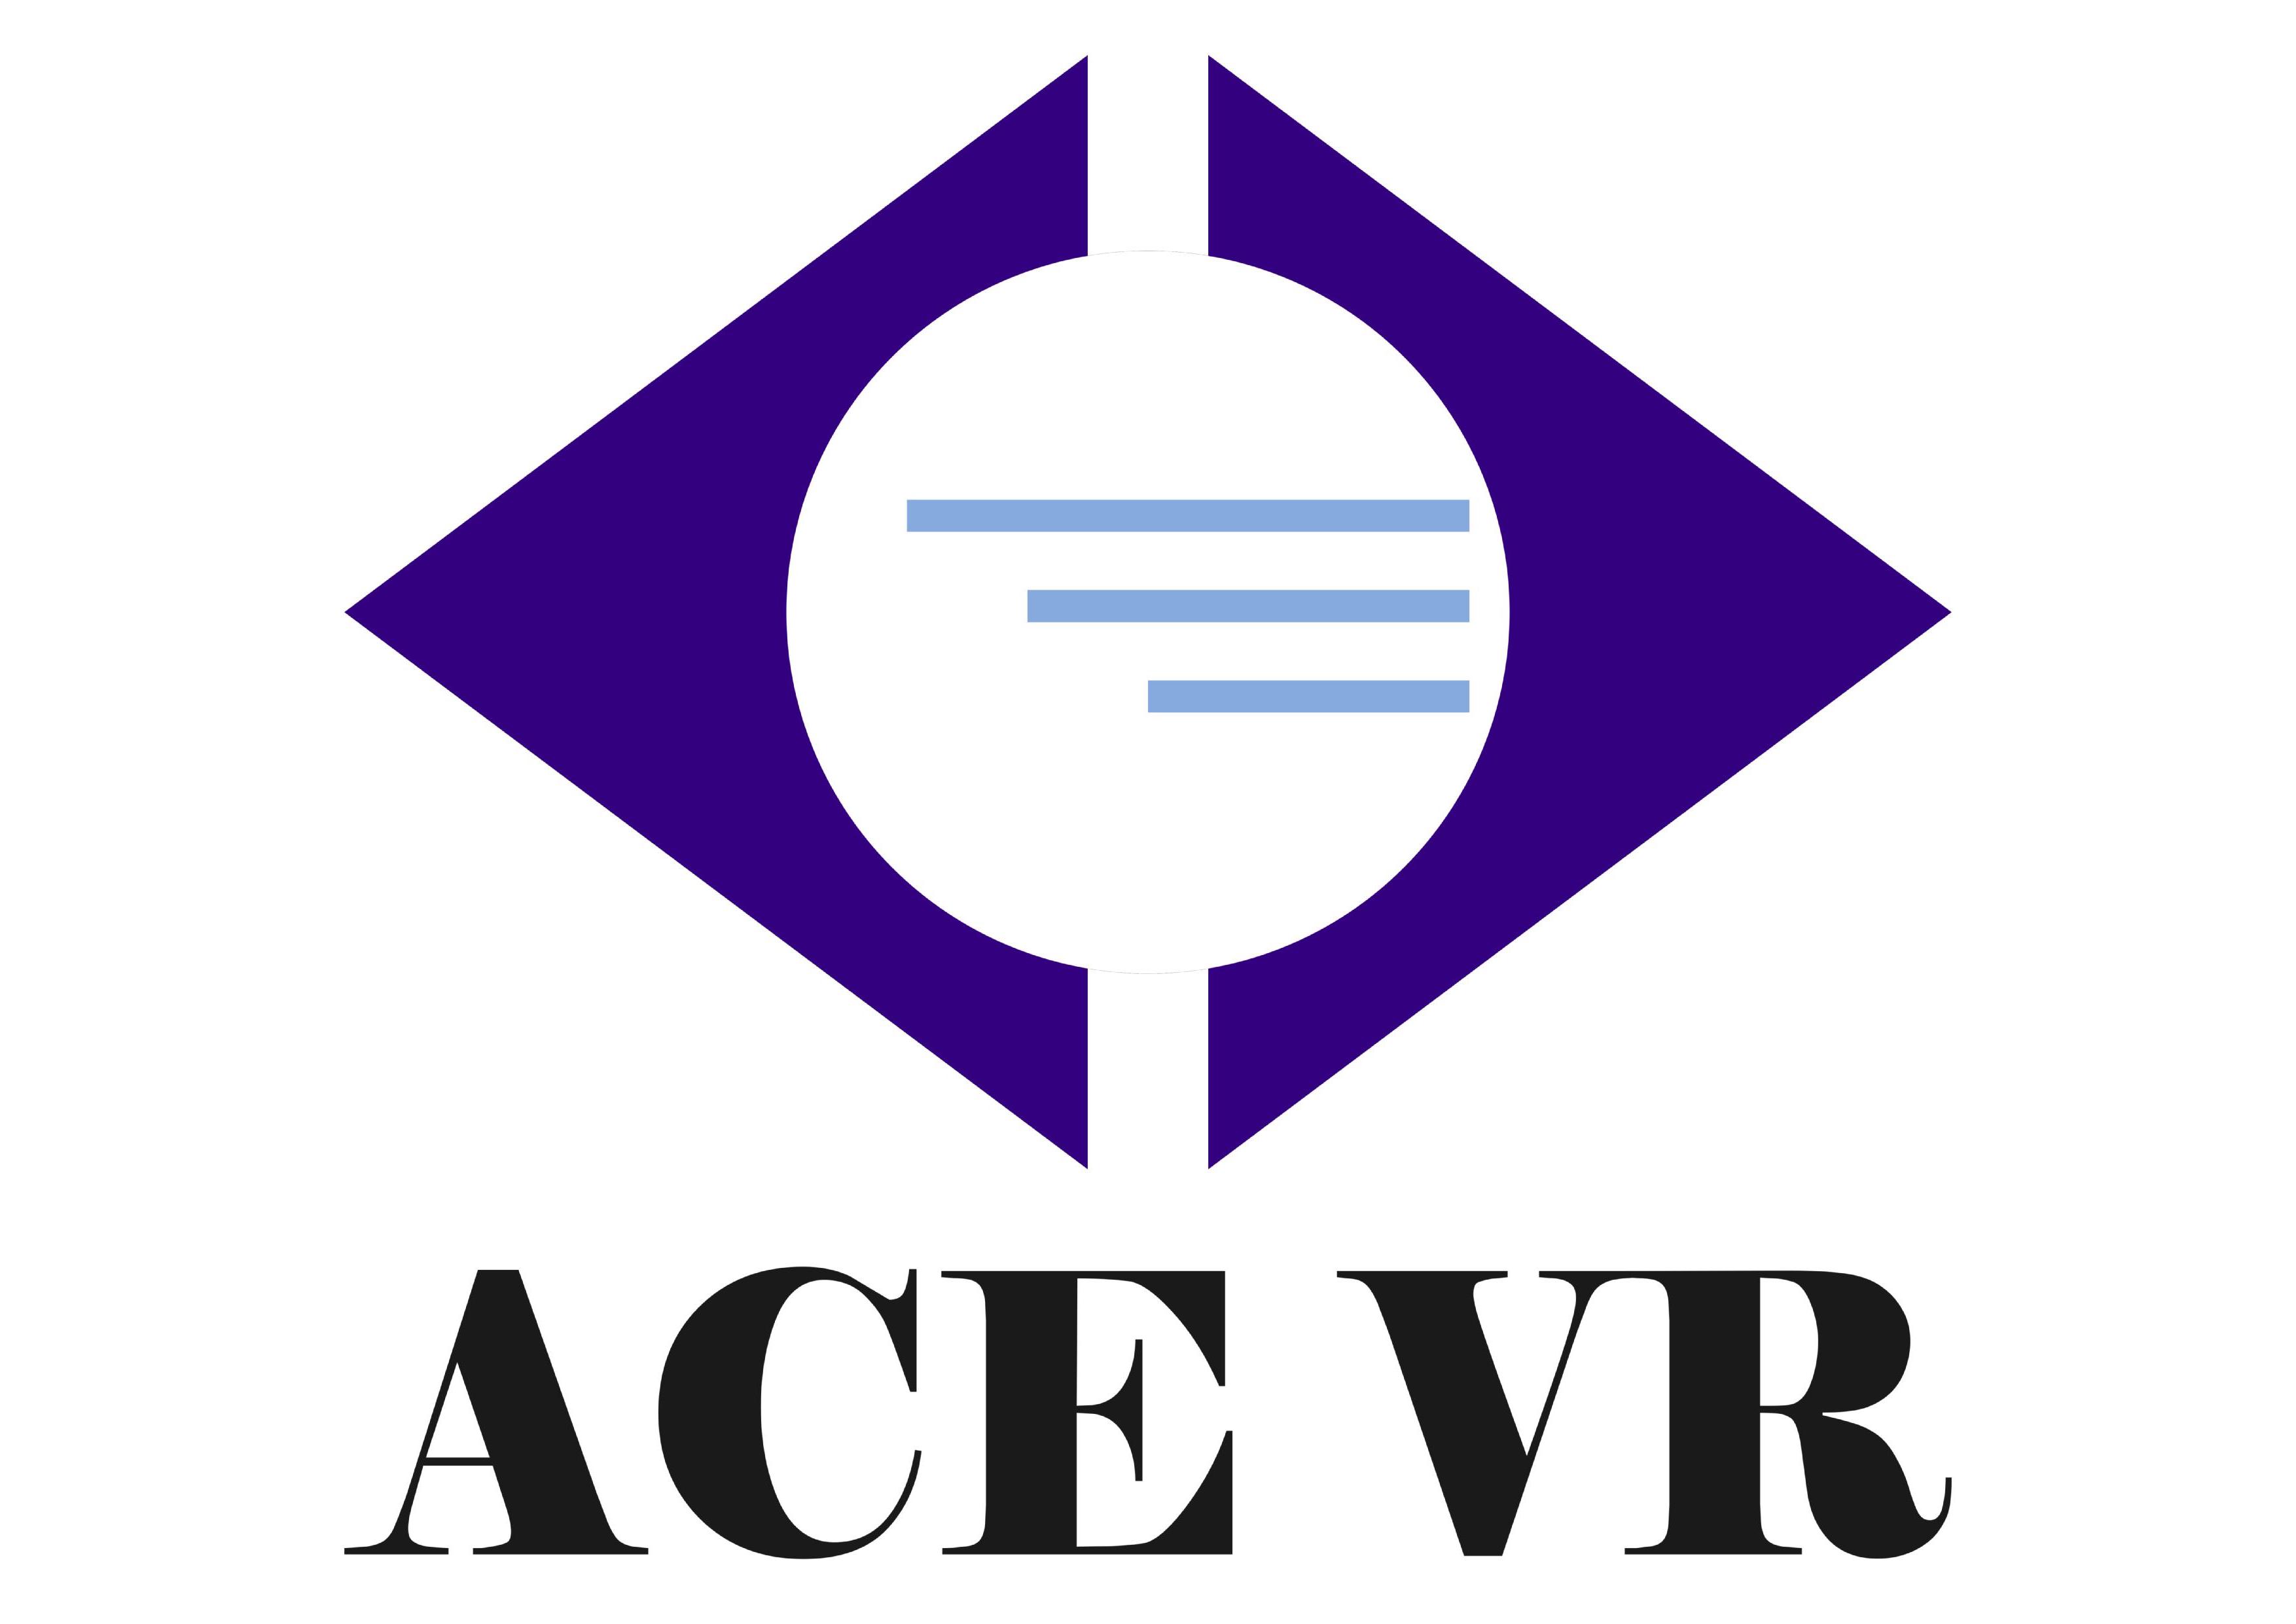 ACE VR